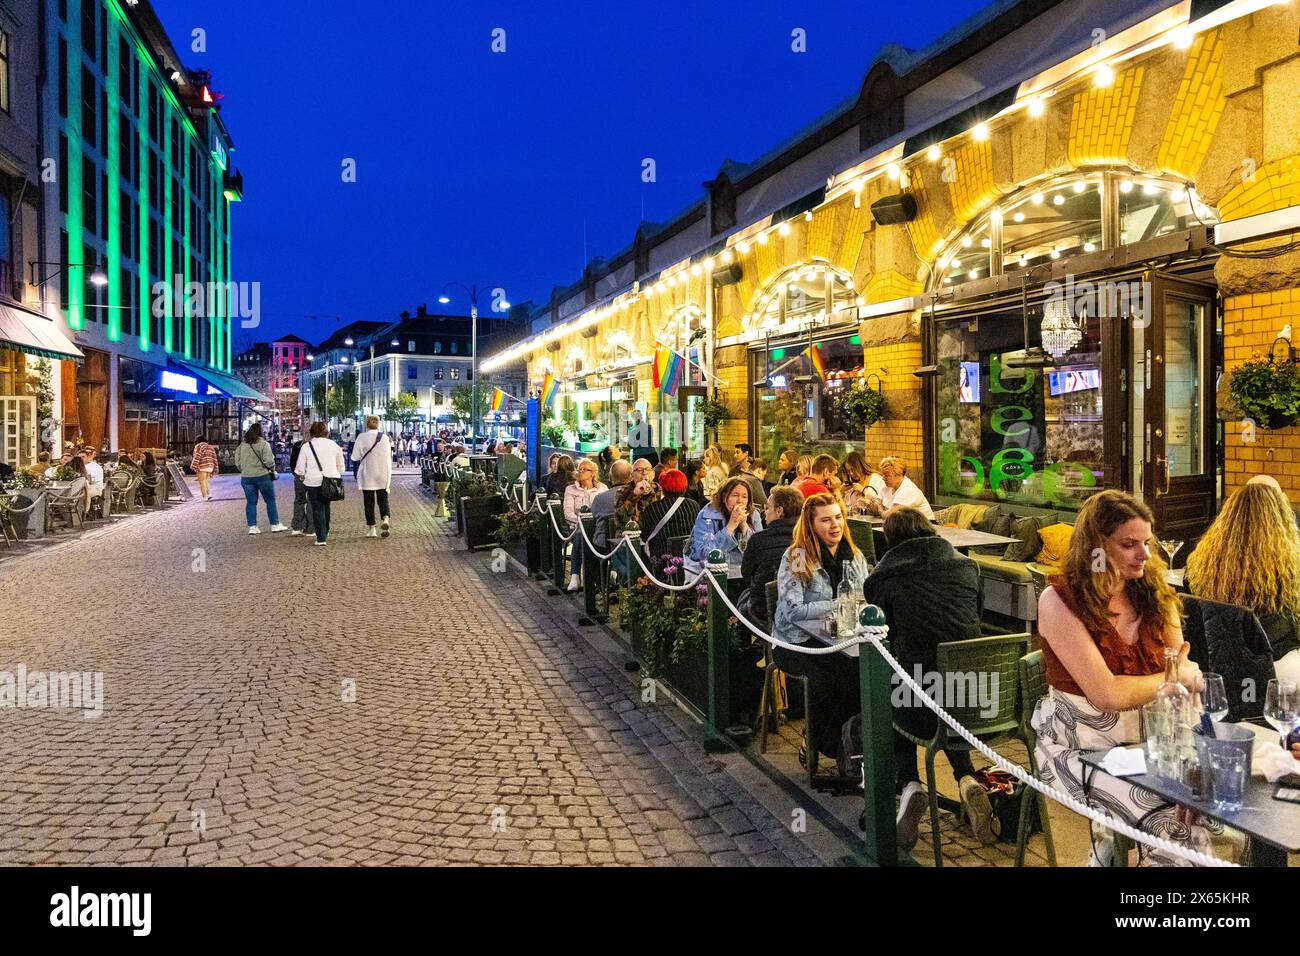 People dining out al fresco outside the Stora Saluhallen market hall, Gothenburg, Sweden Stock Photo